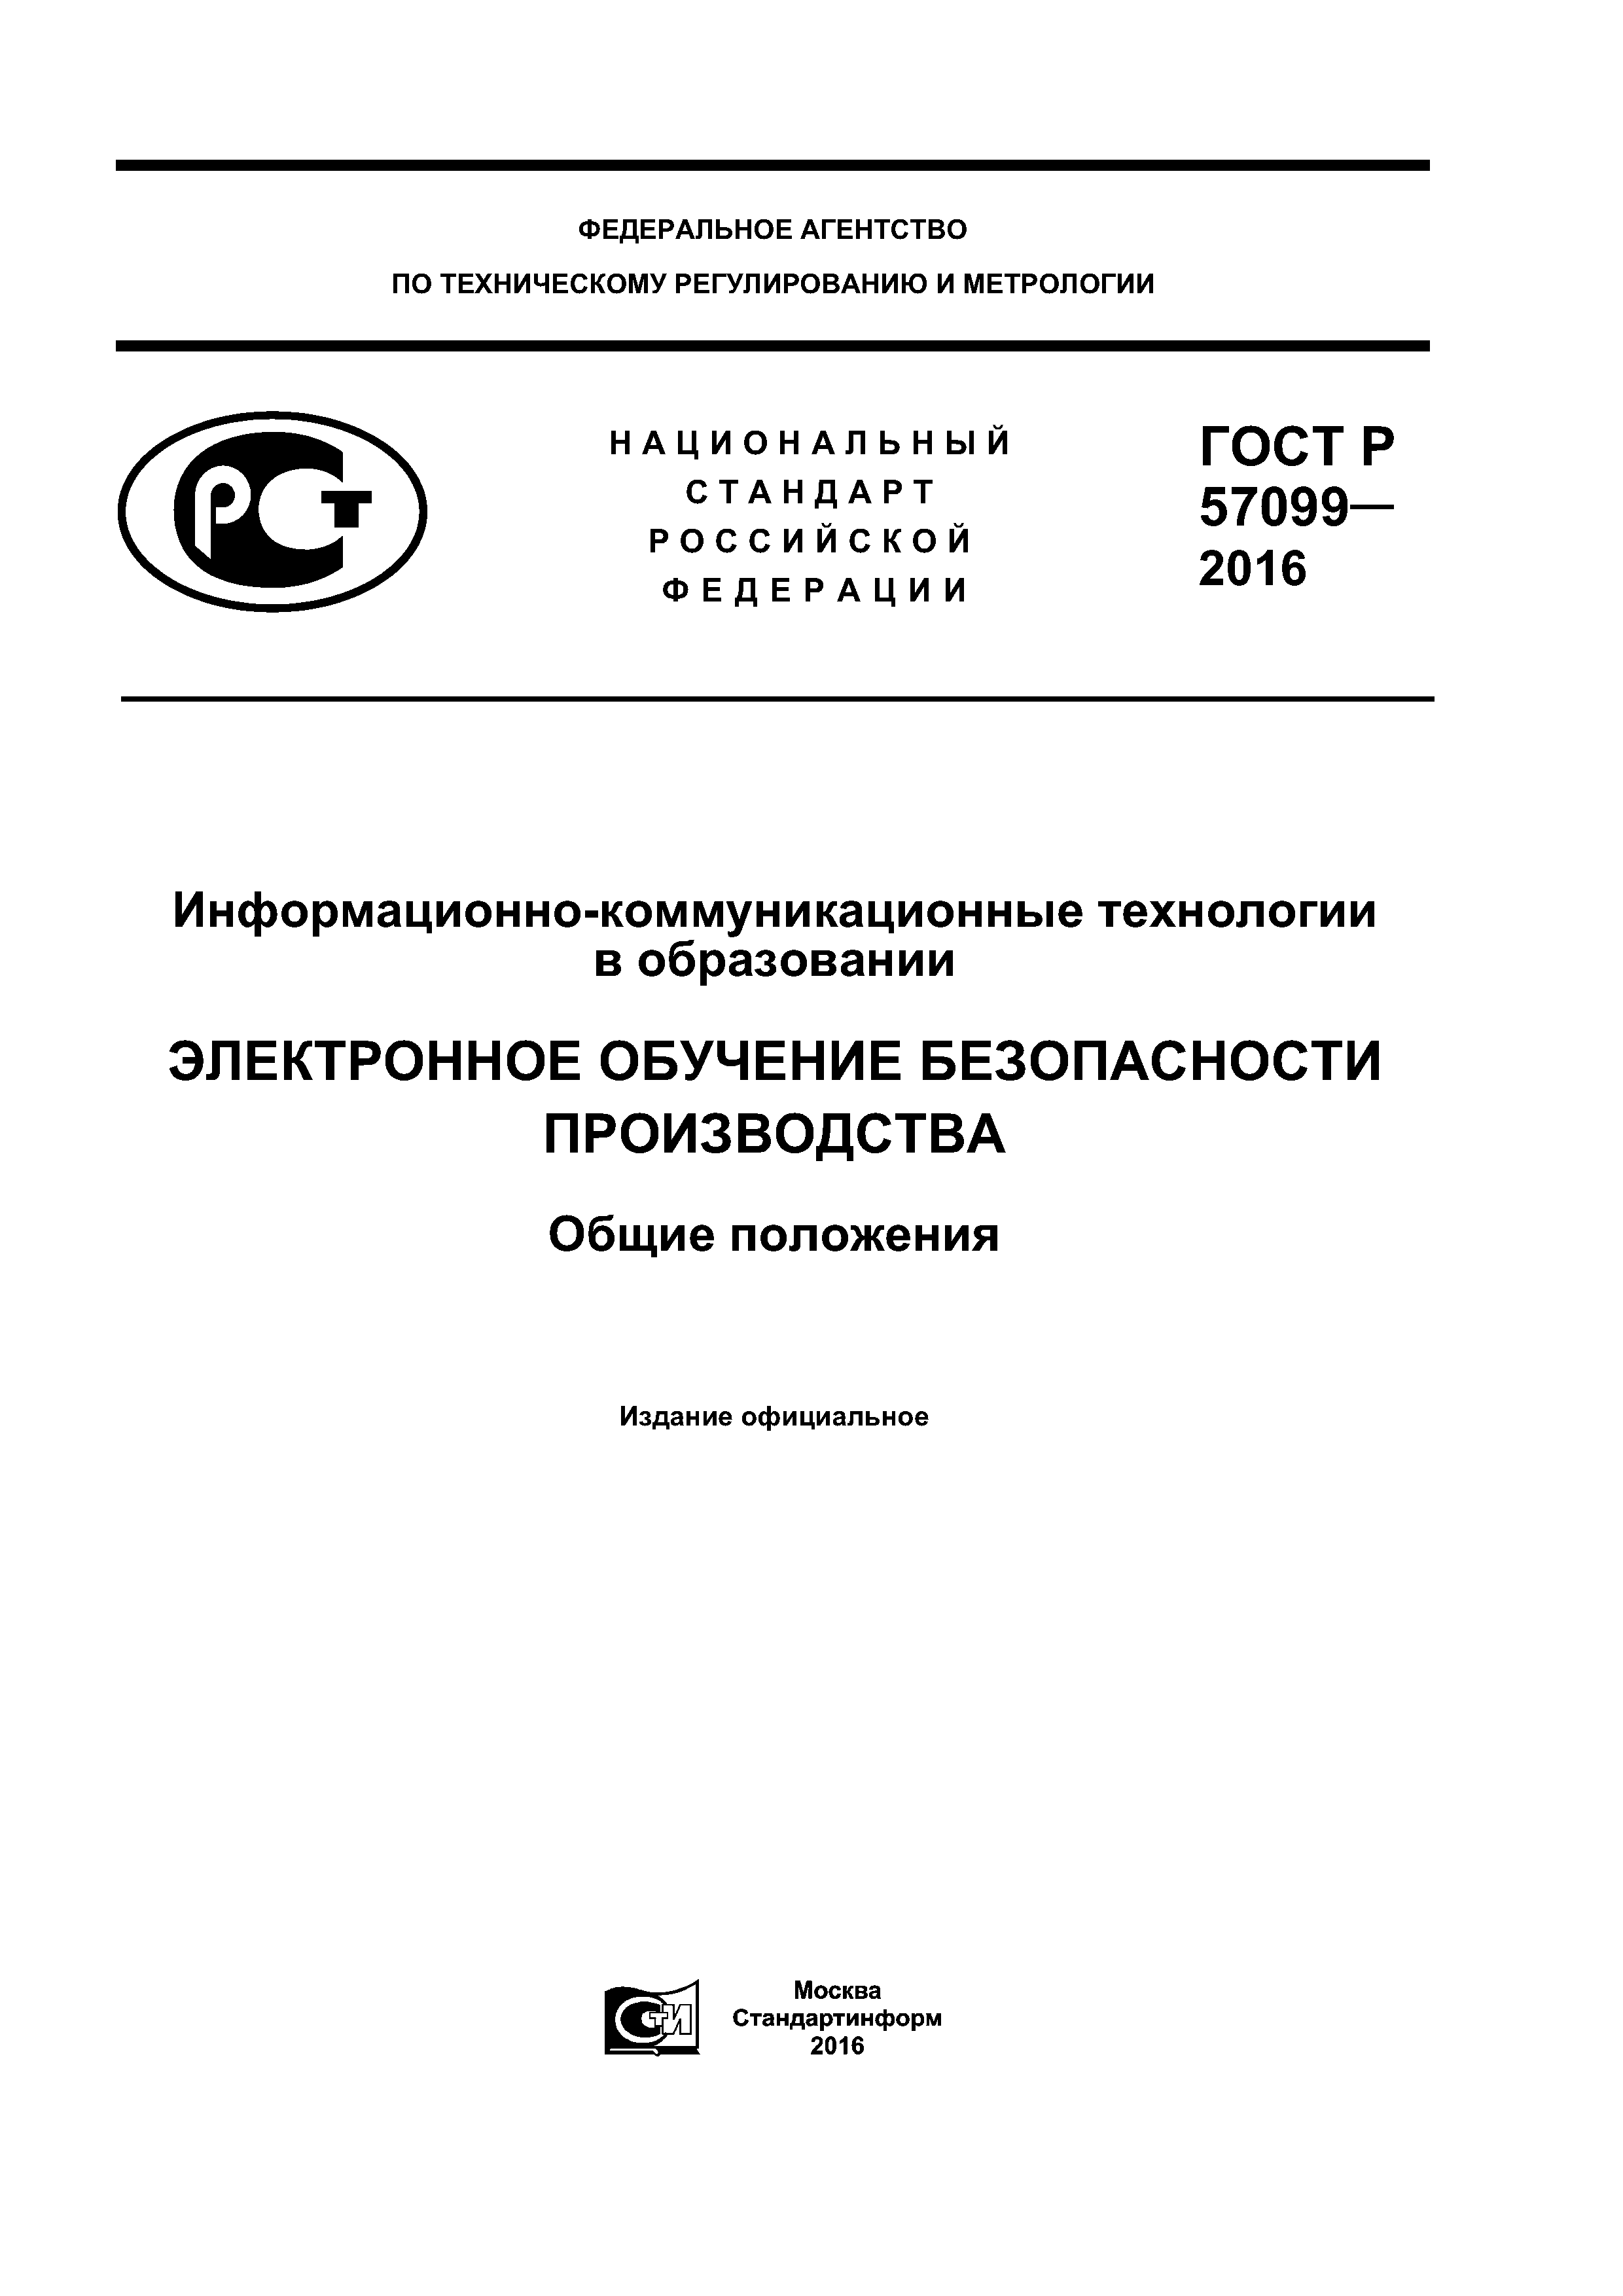 ГОСТ Р 57099-2016